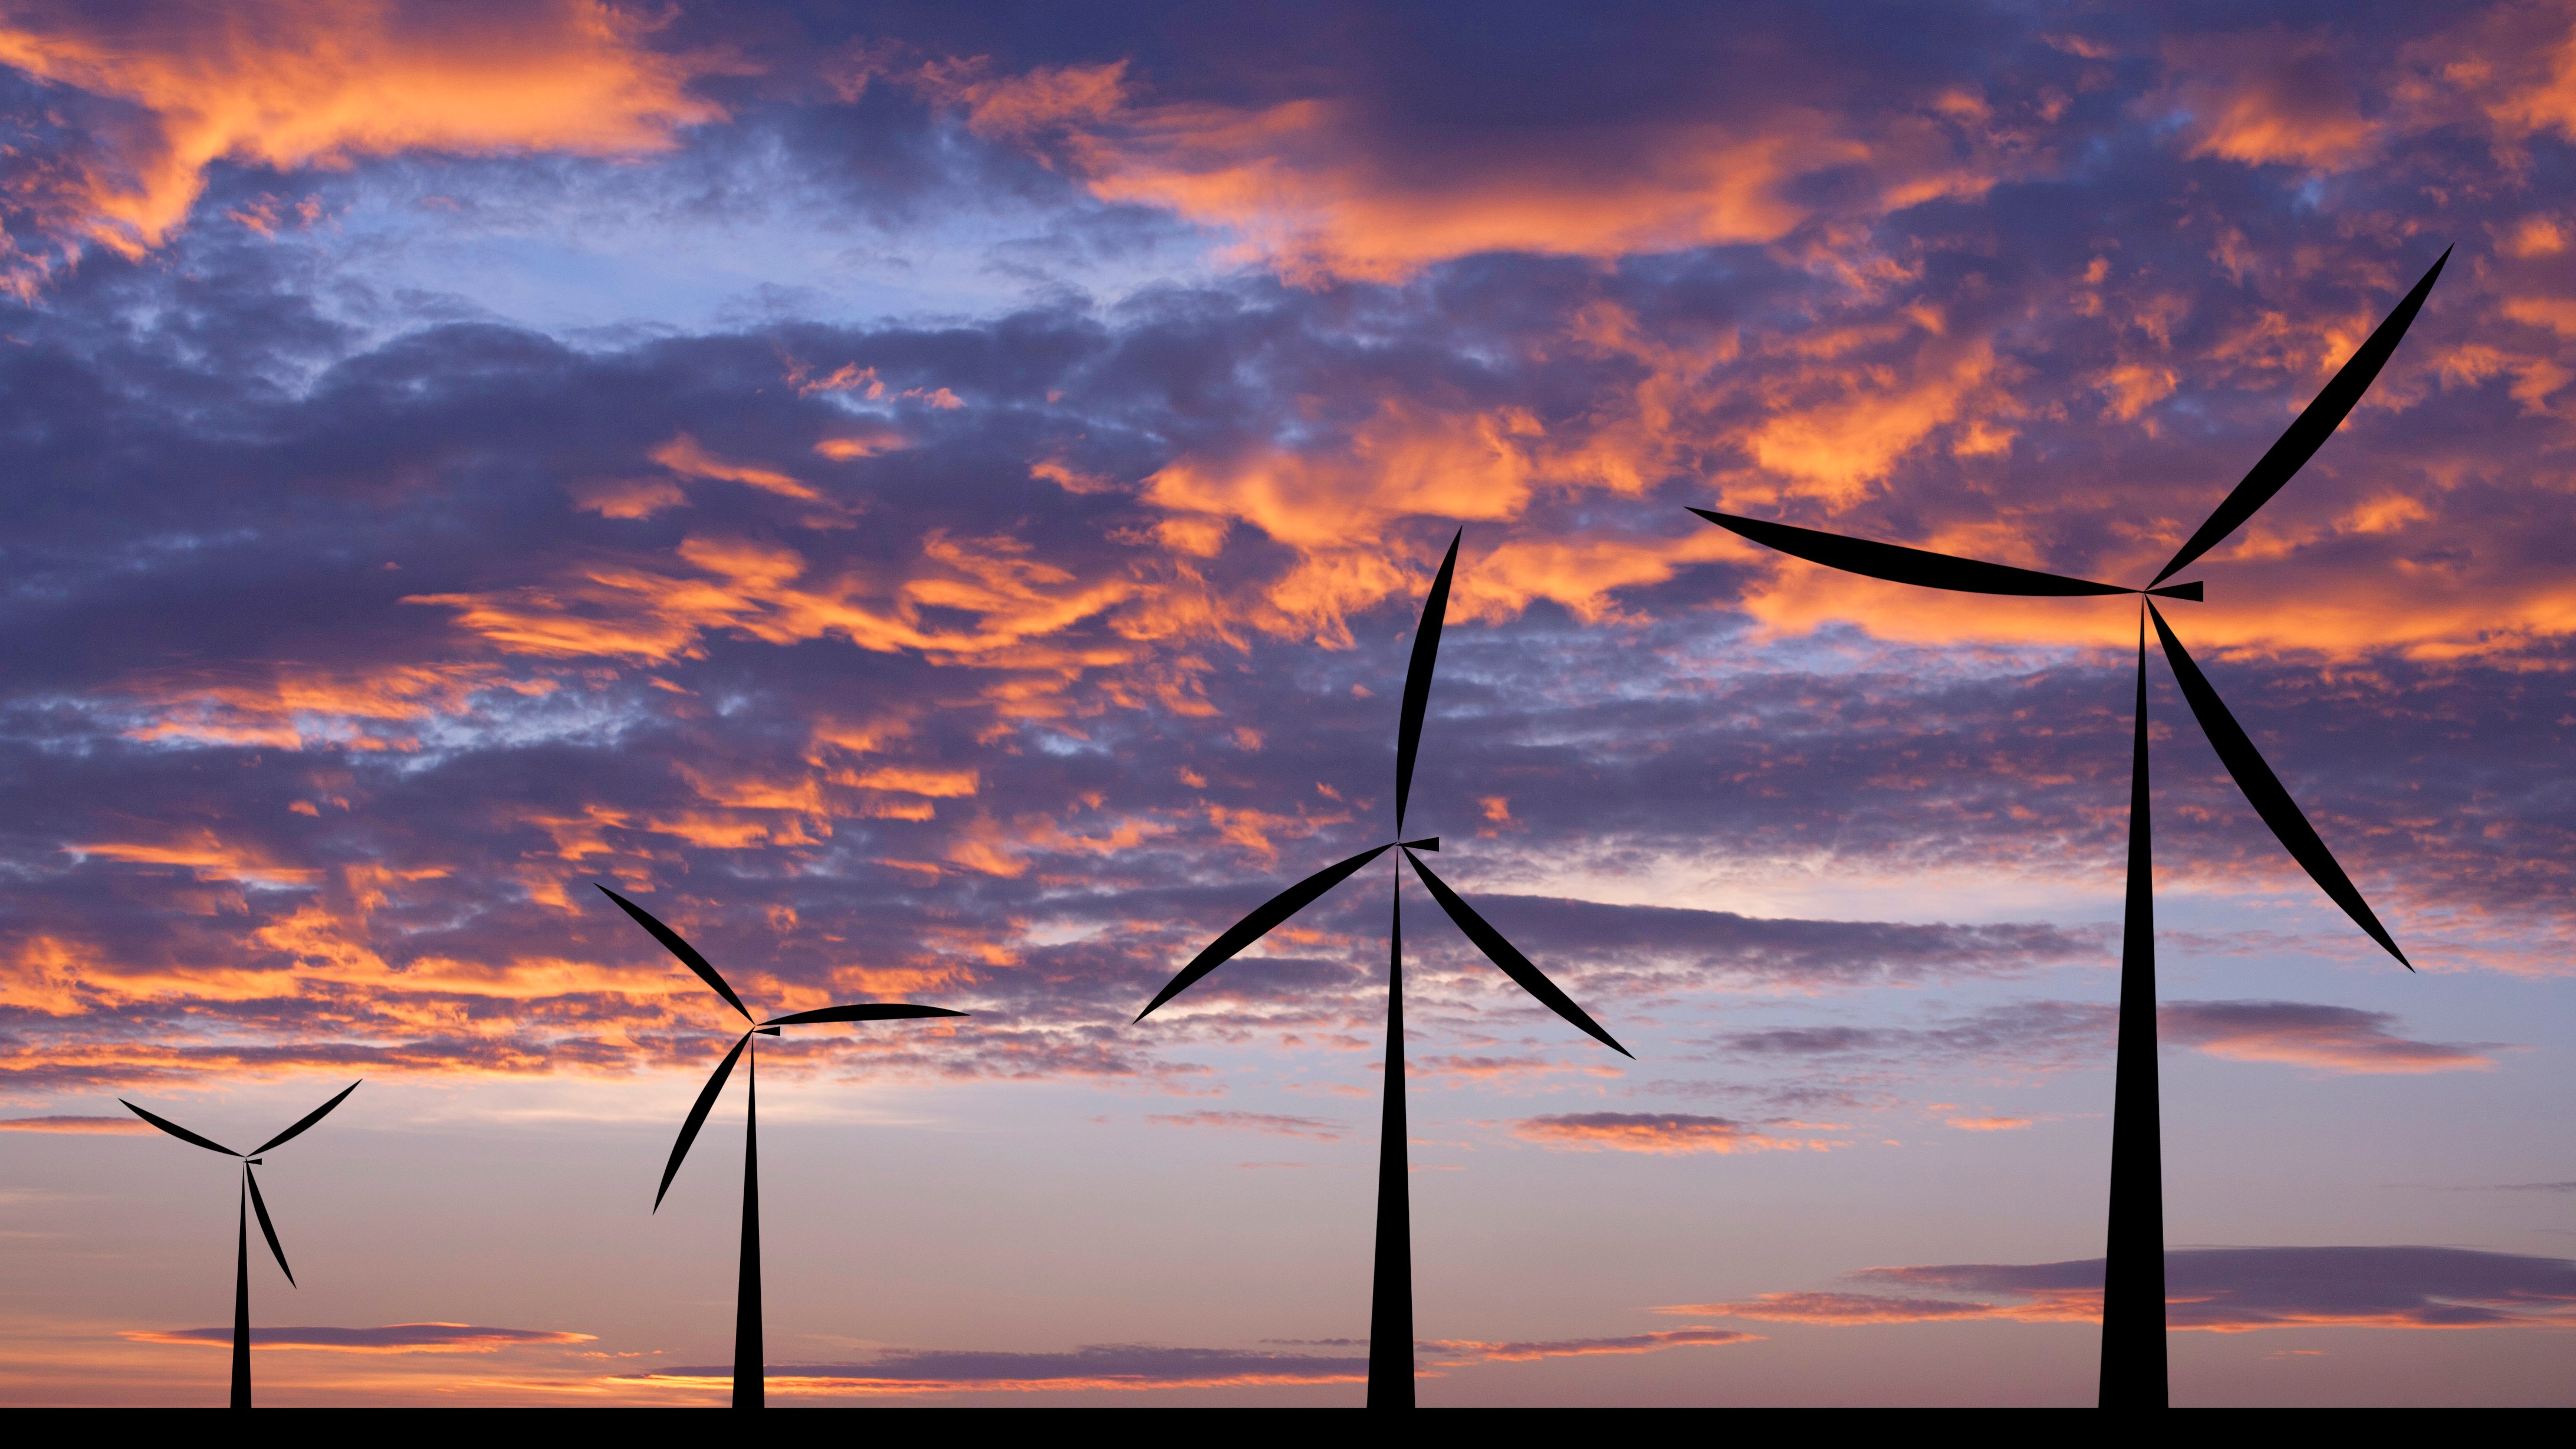 wind-turbine-silhouette-sunset-or-sunrise-economic-system-background-SBI-301086984